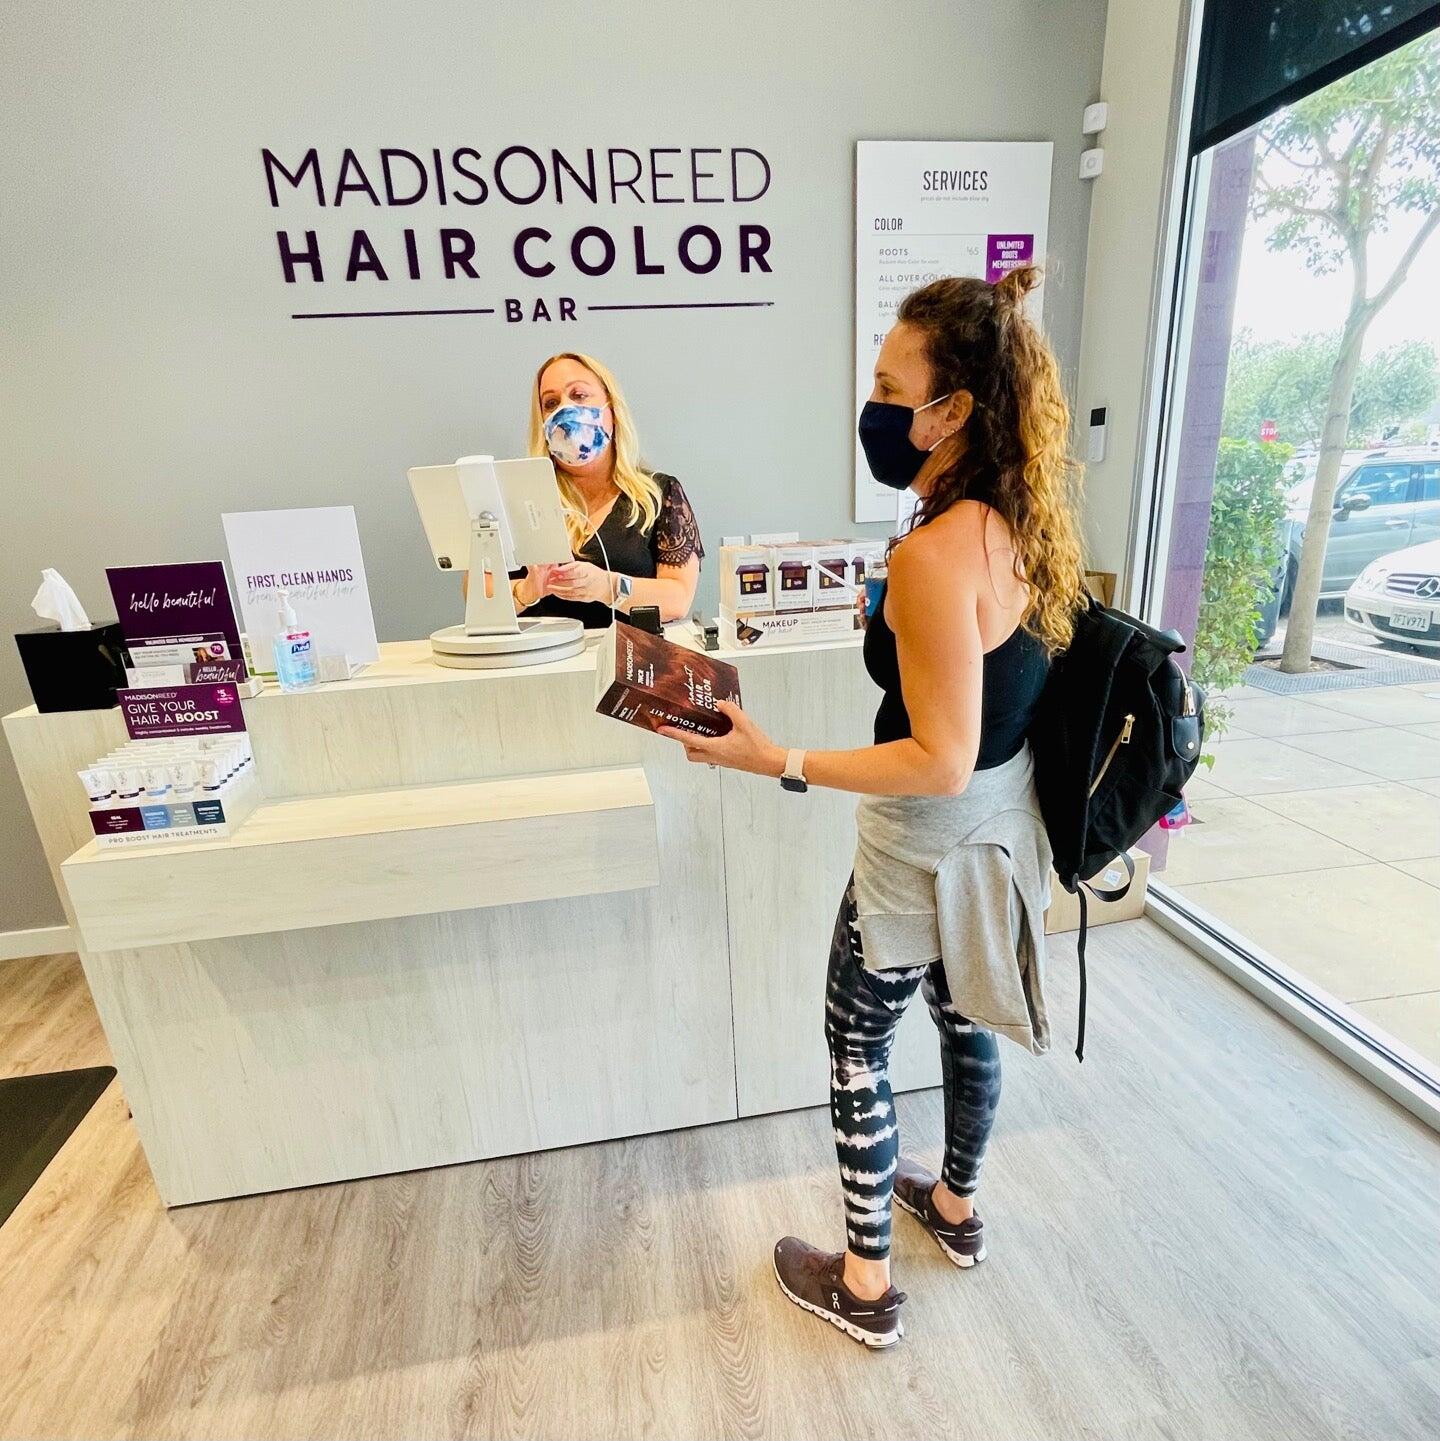 Madison Reed Hair Color Bar Canoga Park- Woodland Hills 6250 CA-27 Suite 1515, Topanga California 91367